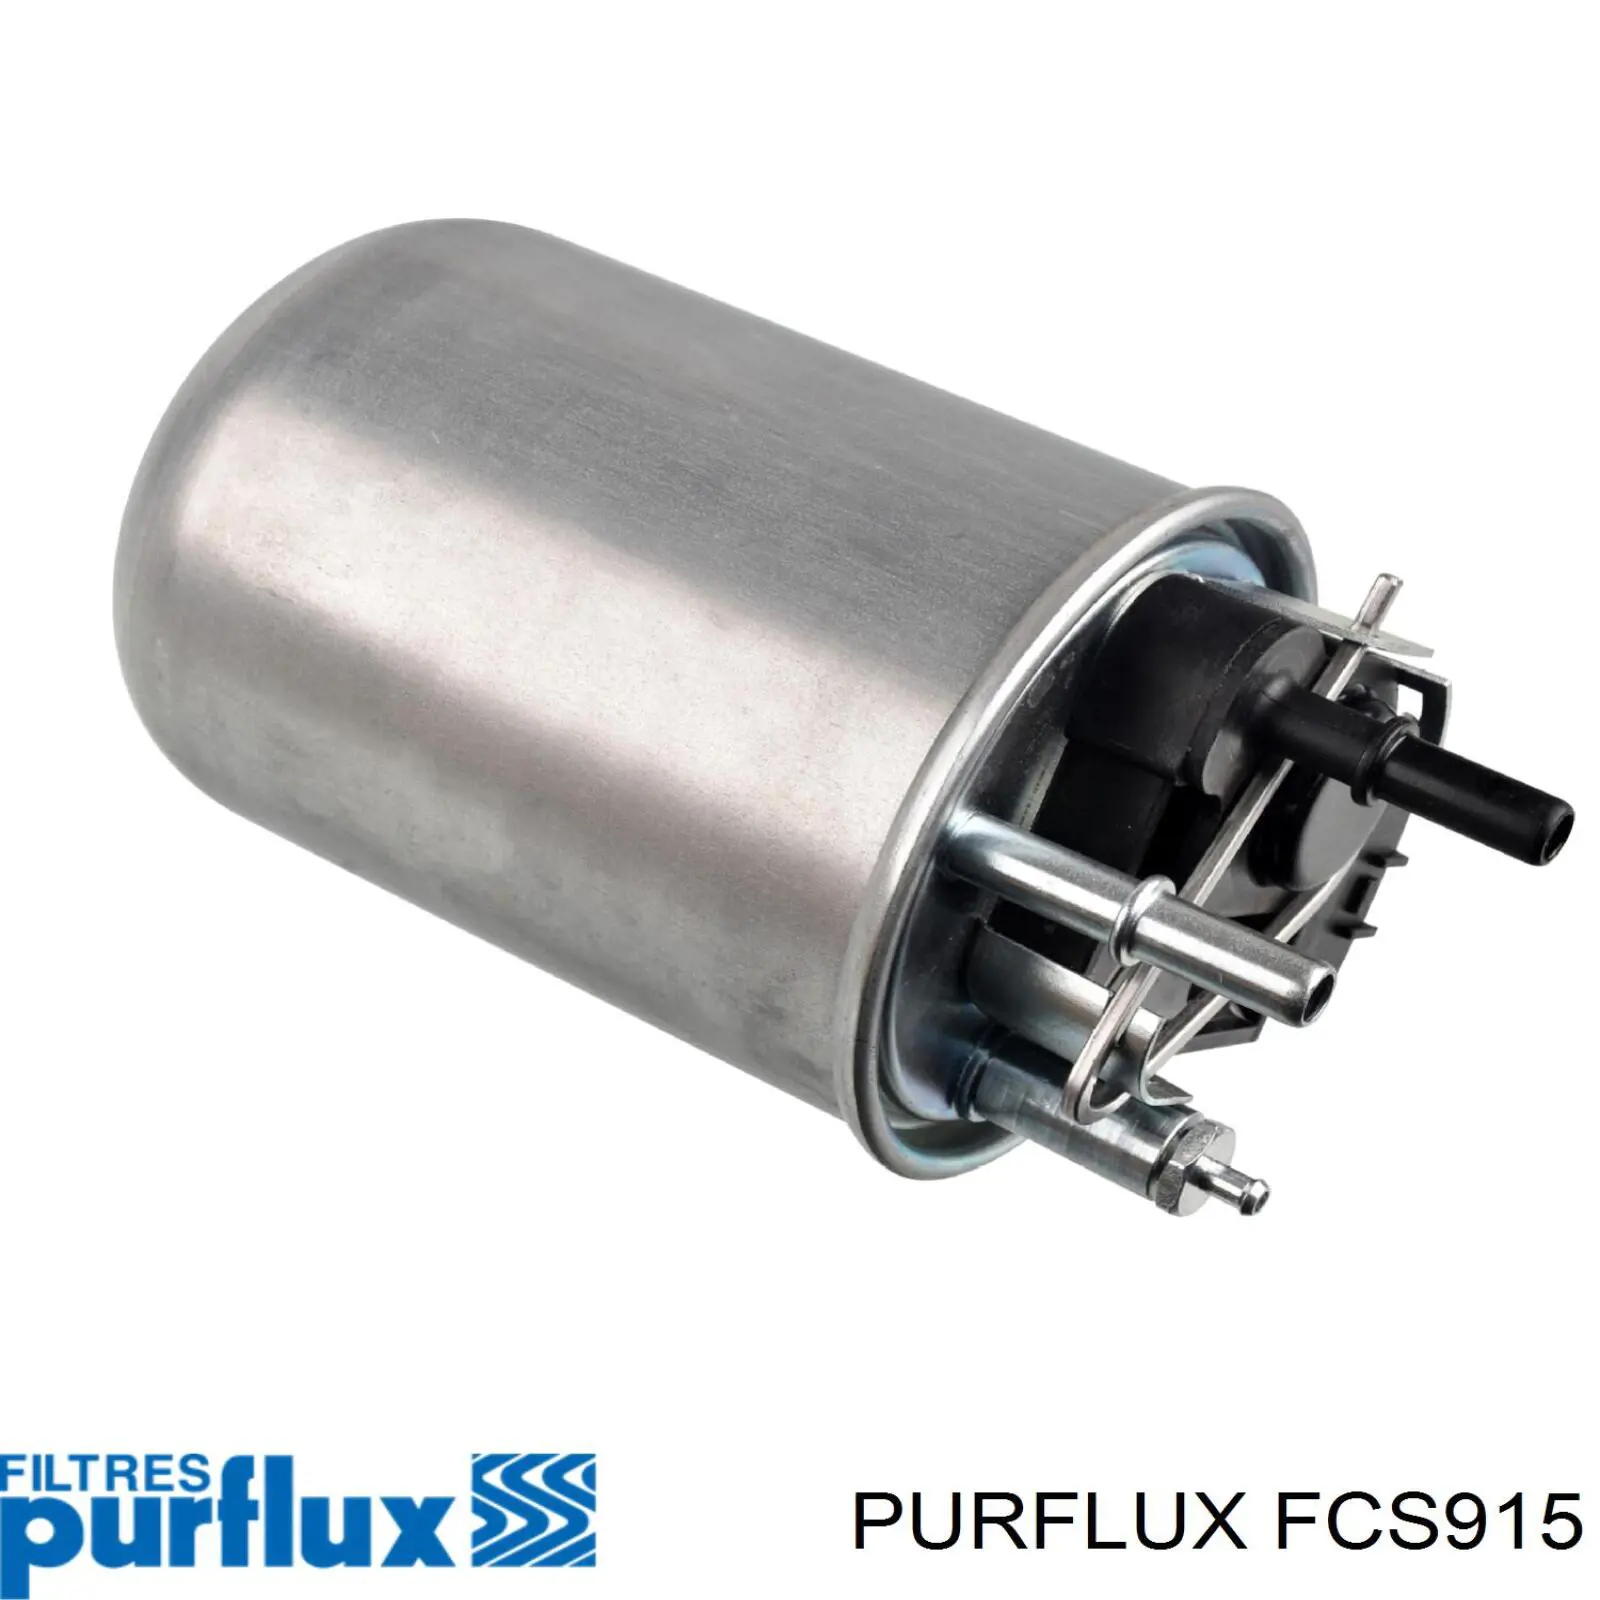 FCS915 Purflux filtro combustible